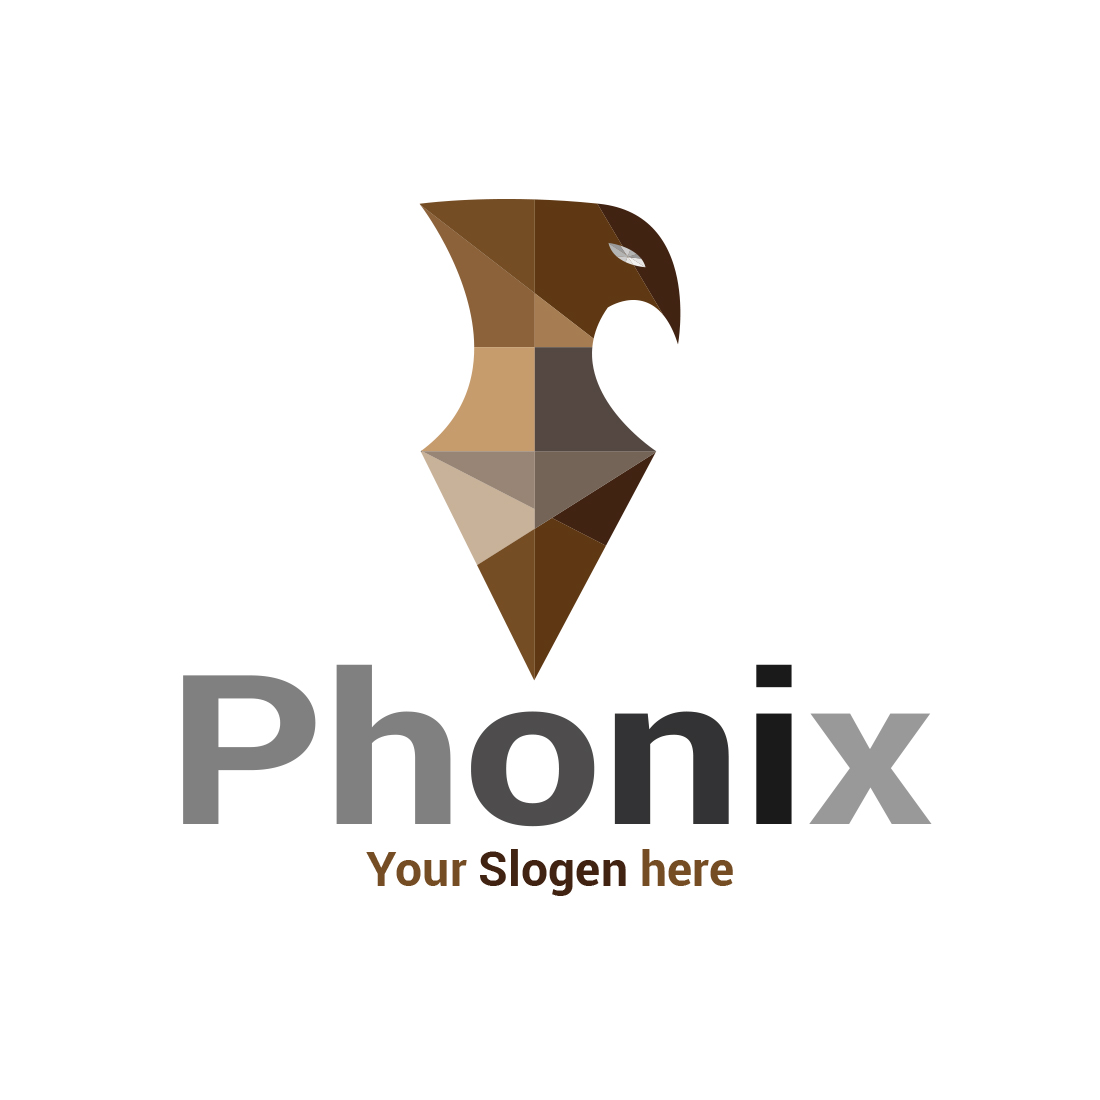 Phonix geometric logo design cover image.